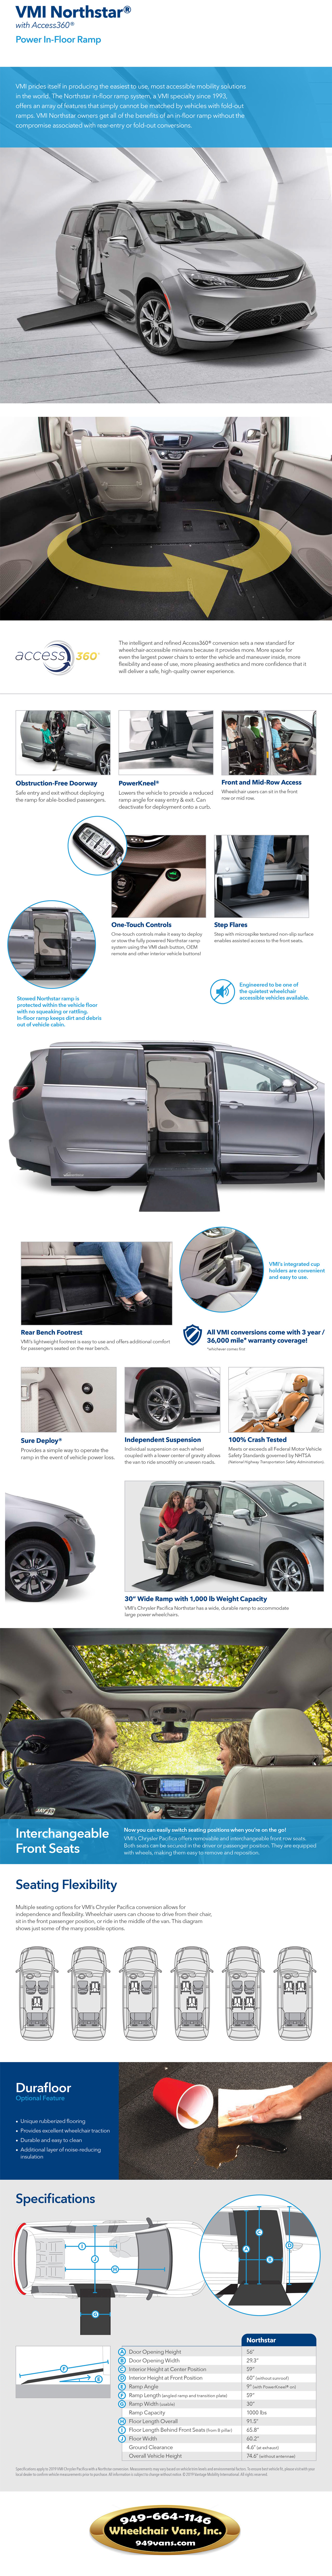 Chrysler Pacifica VMI Northstar VMI Summit with Access 360 Power Infloor Wheelchair Van Conversion